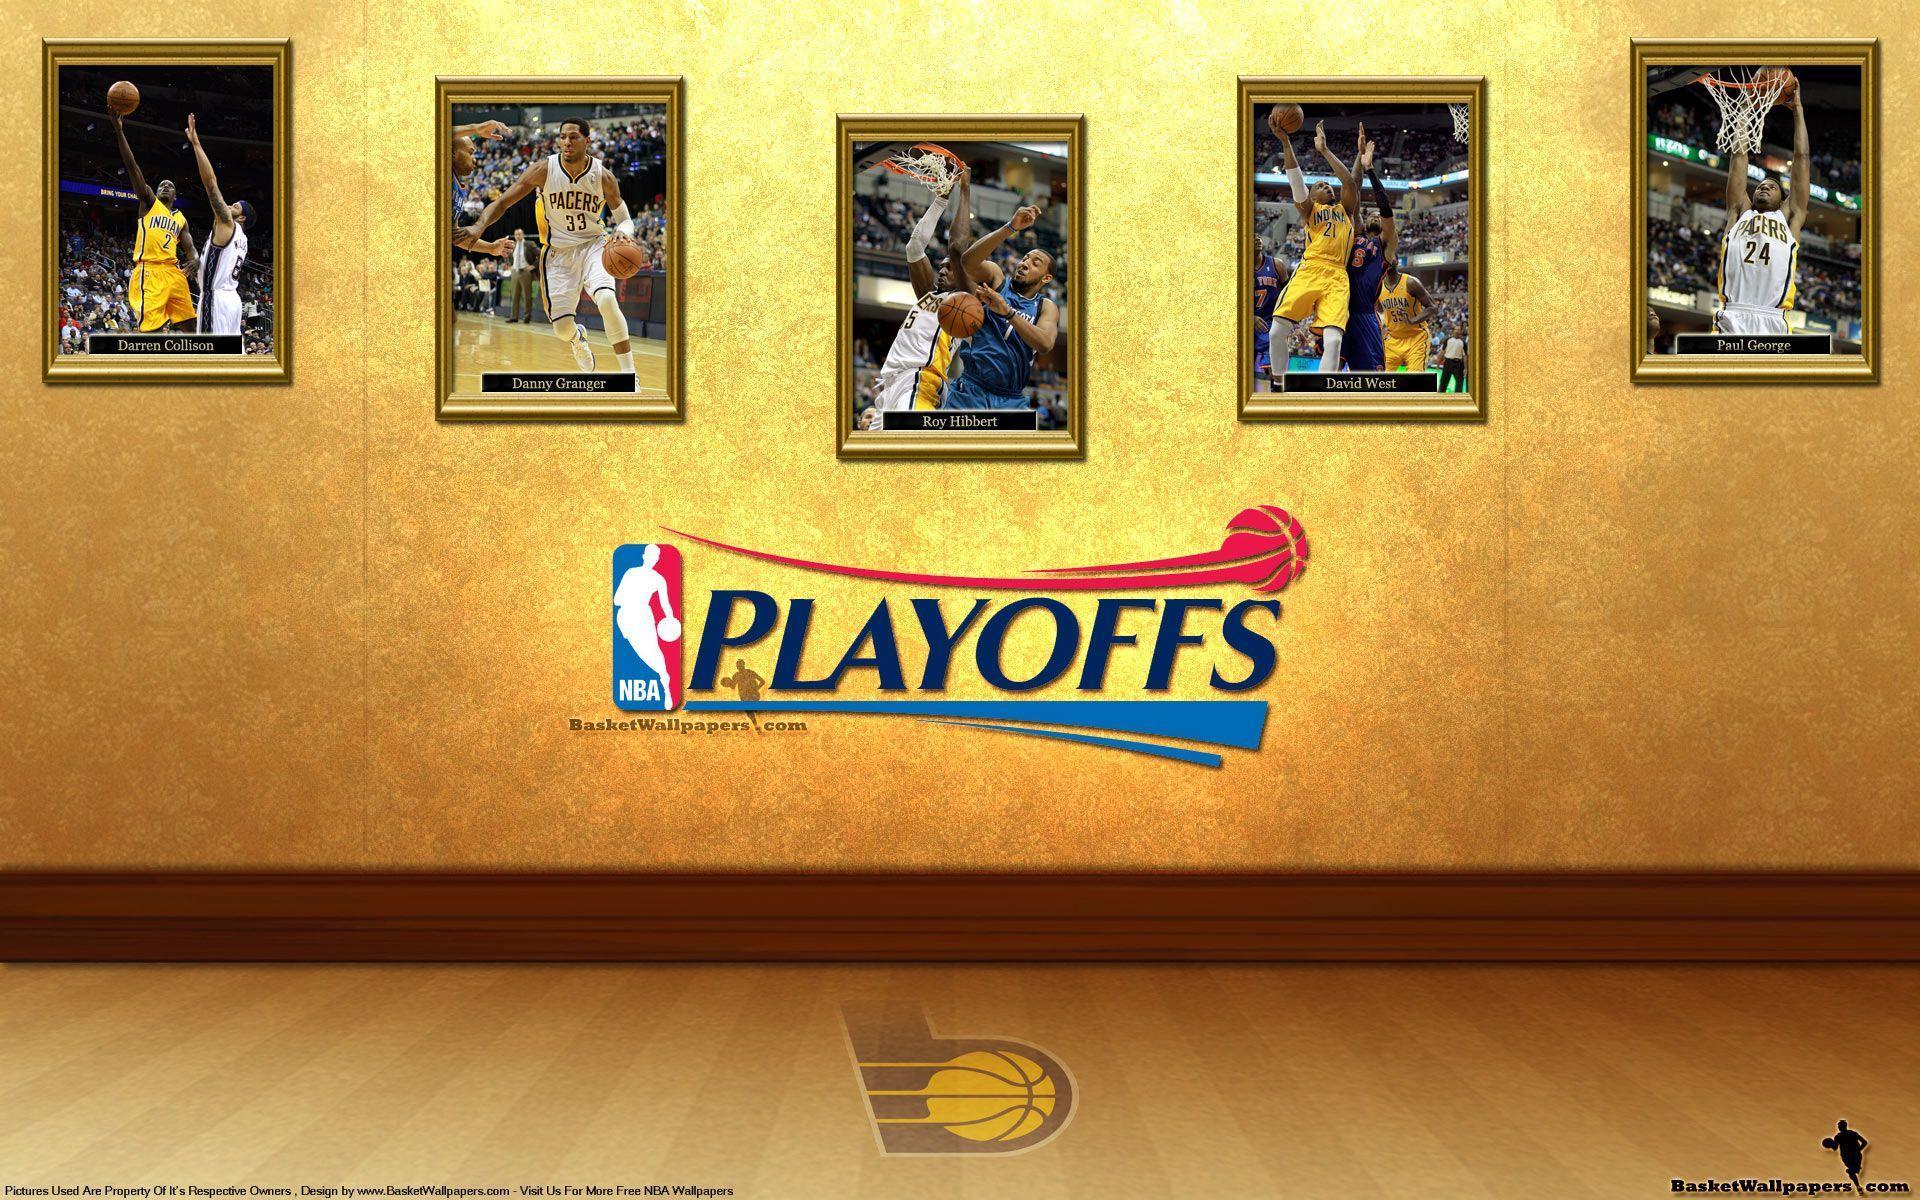 Indiana Pacers Wallpaper. Basketball Wallpaper at